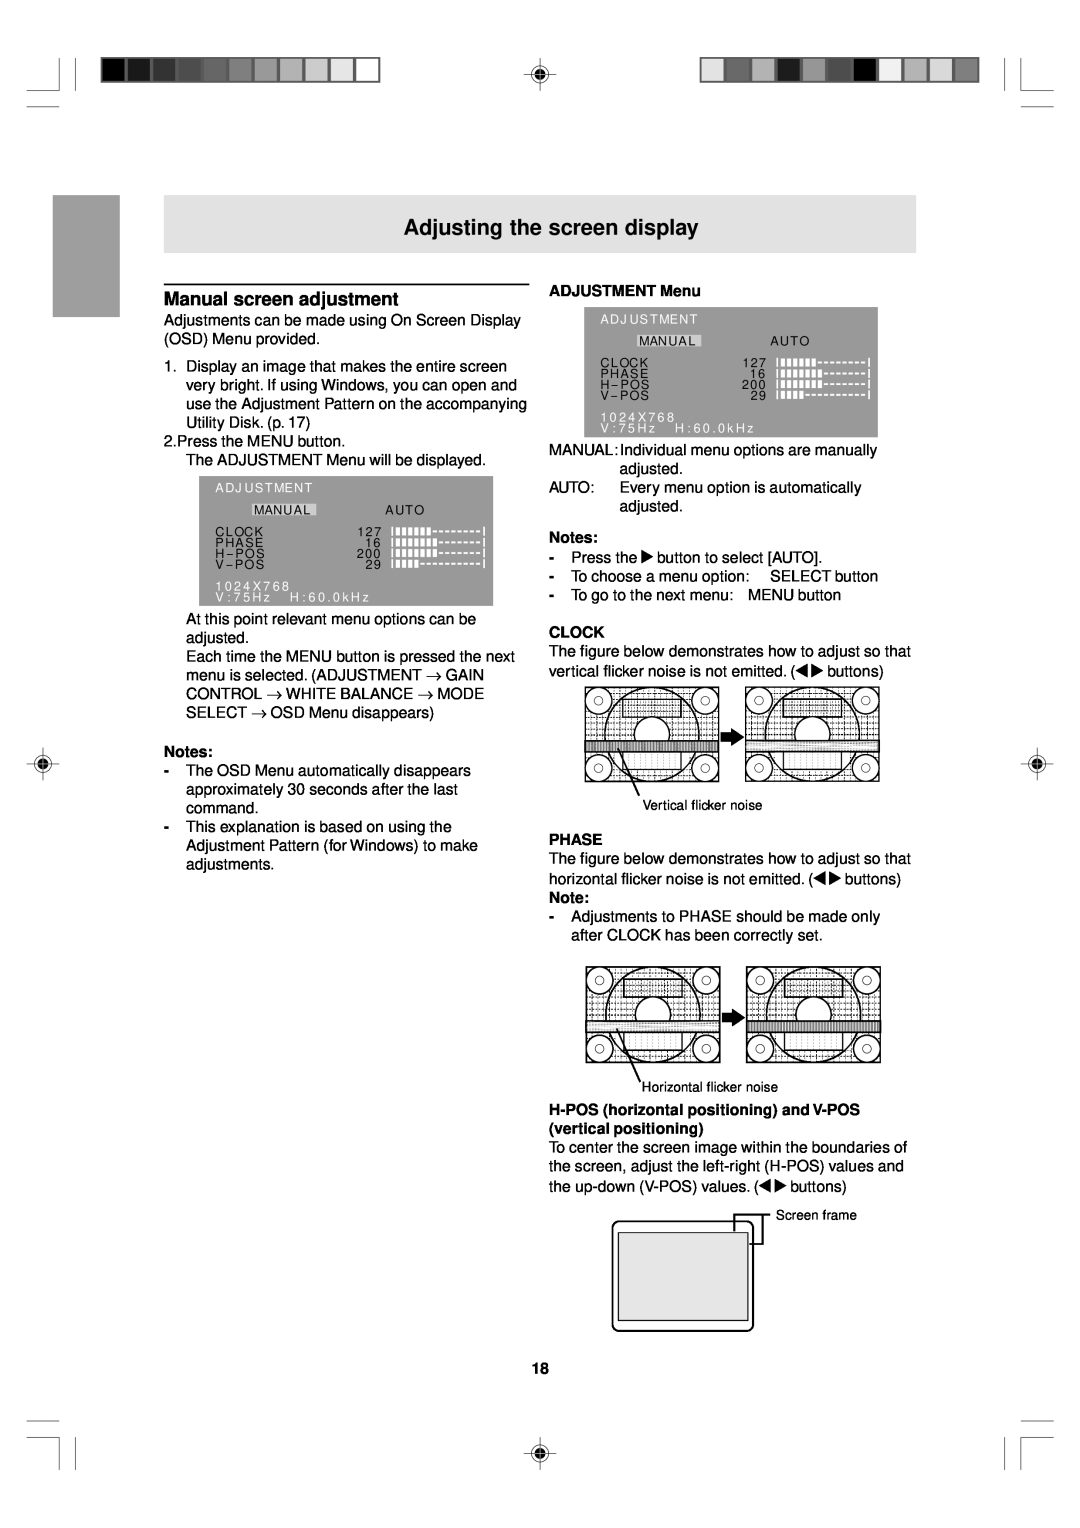 Sharp LL-T15V1 operation manual Manual screen adjustment, ADJUSTMENT Menu, Clock, Phase, Adjusting the screen display 